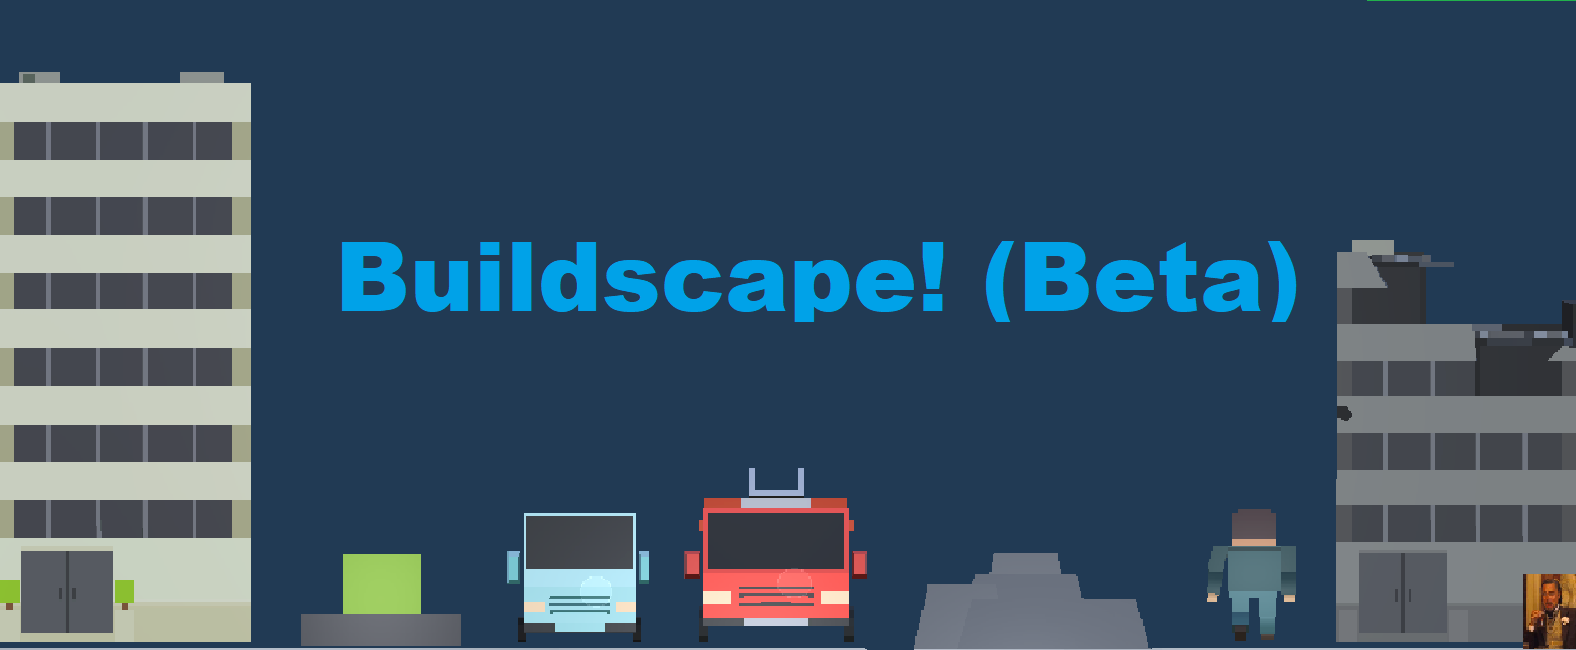 Buildscape